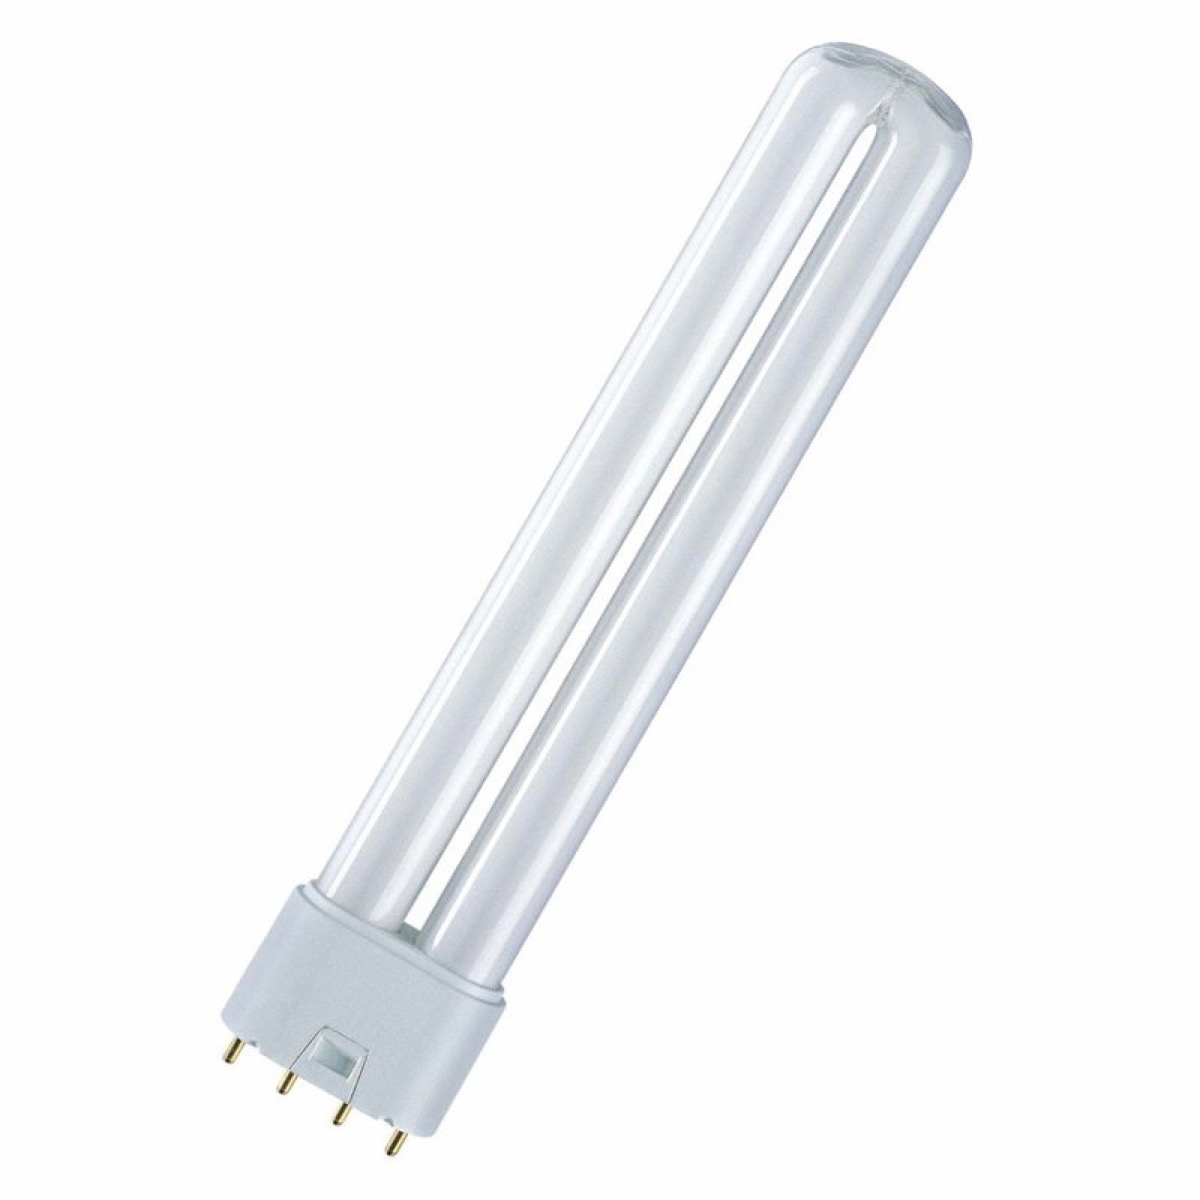 UNI-ElektroOSRAM Kompaktlampe 2G11 55W Warmton